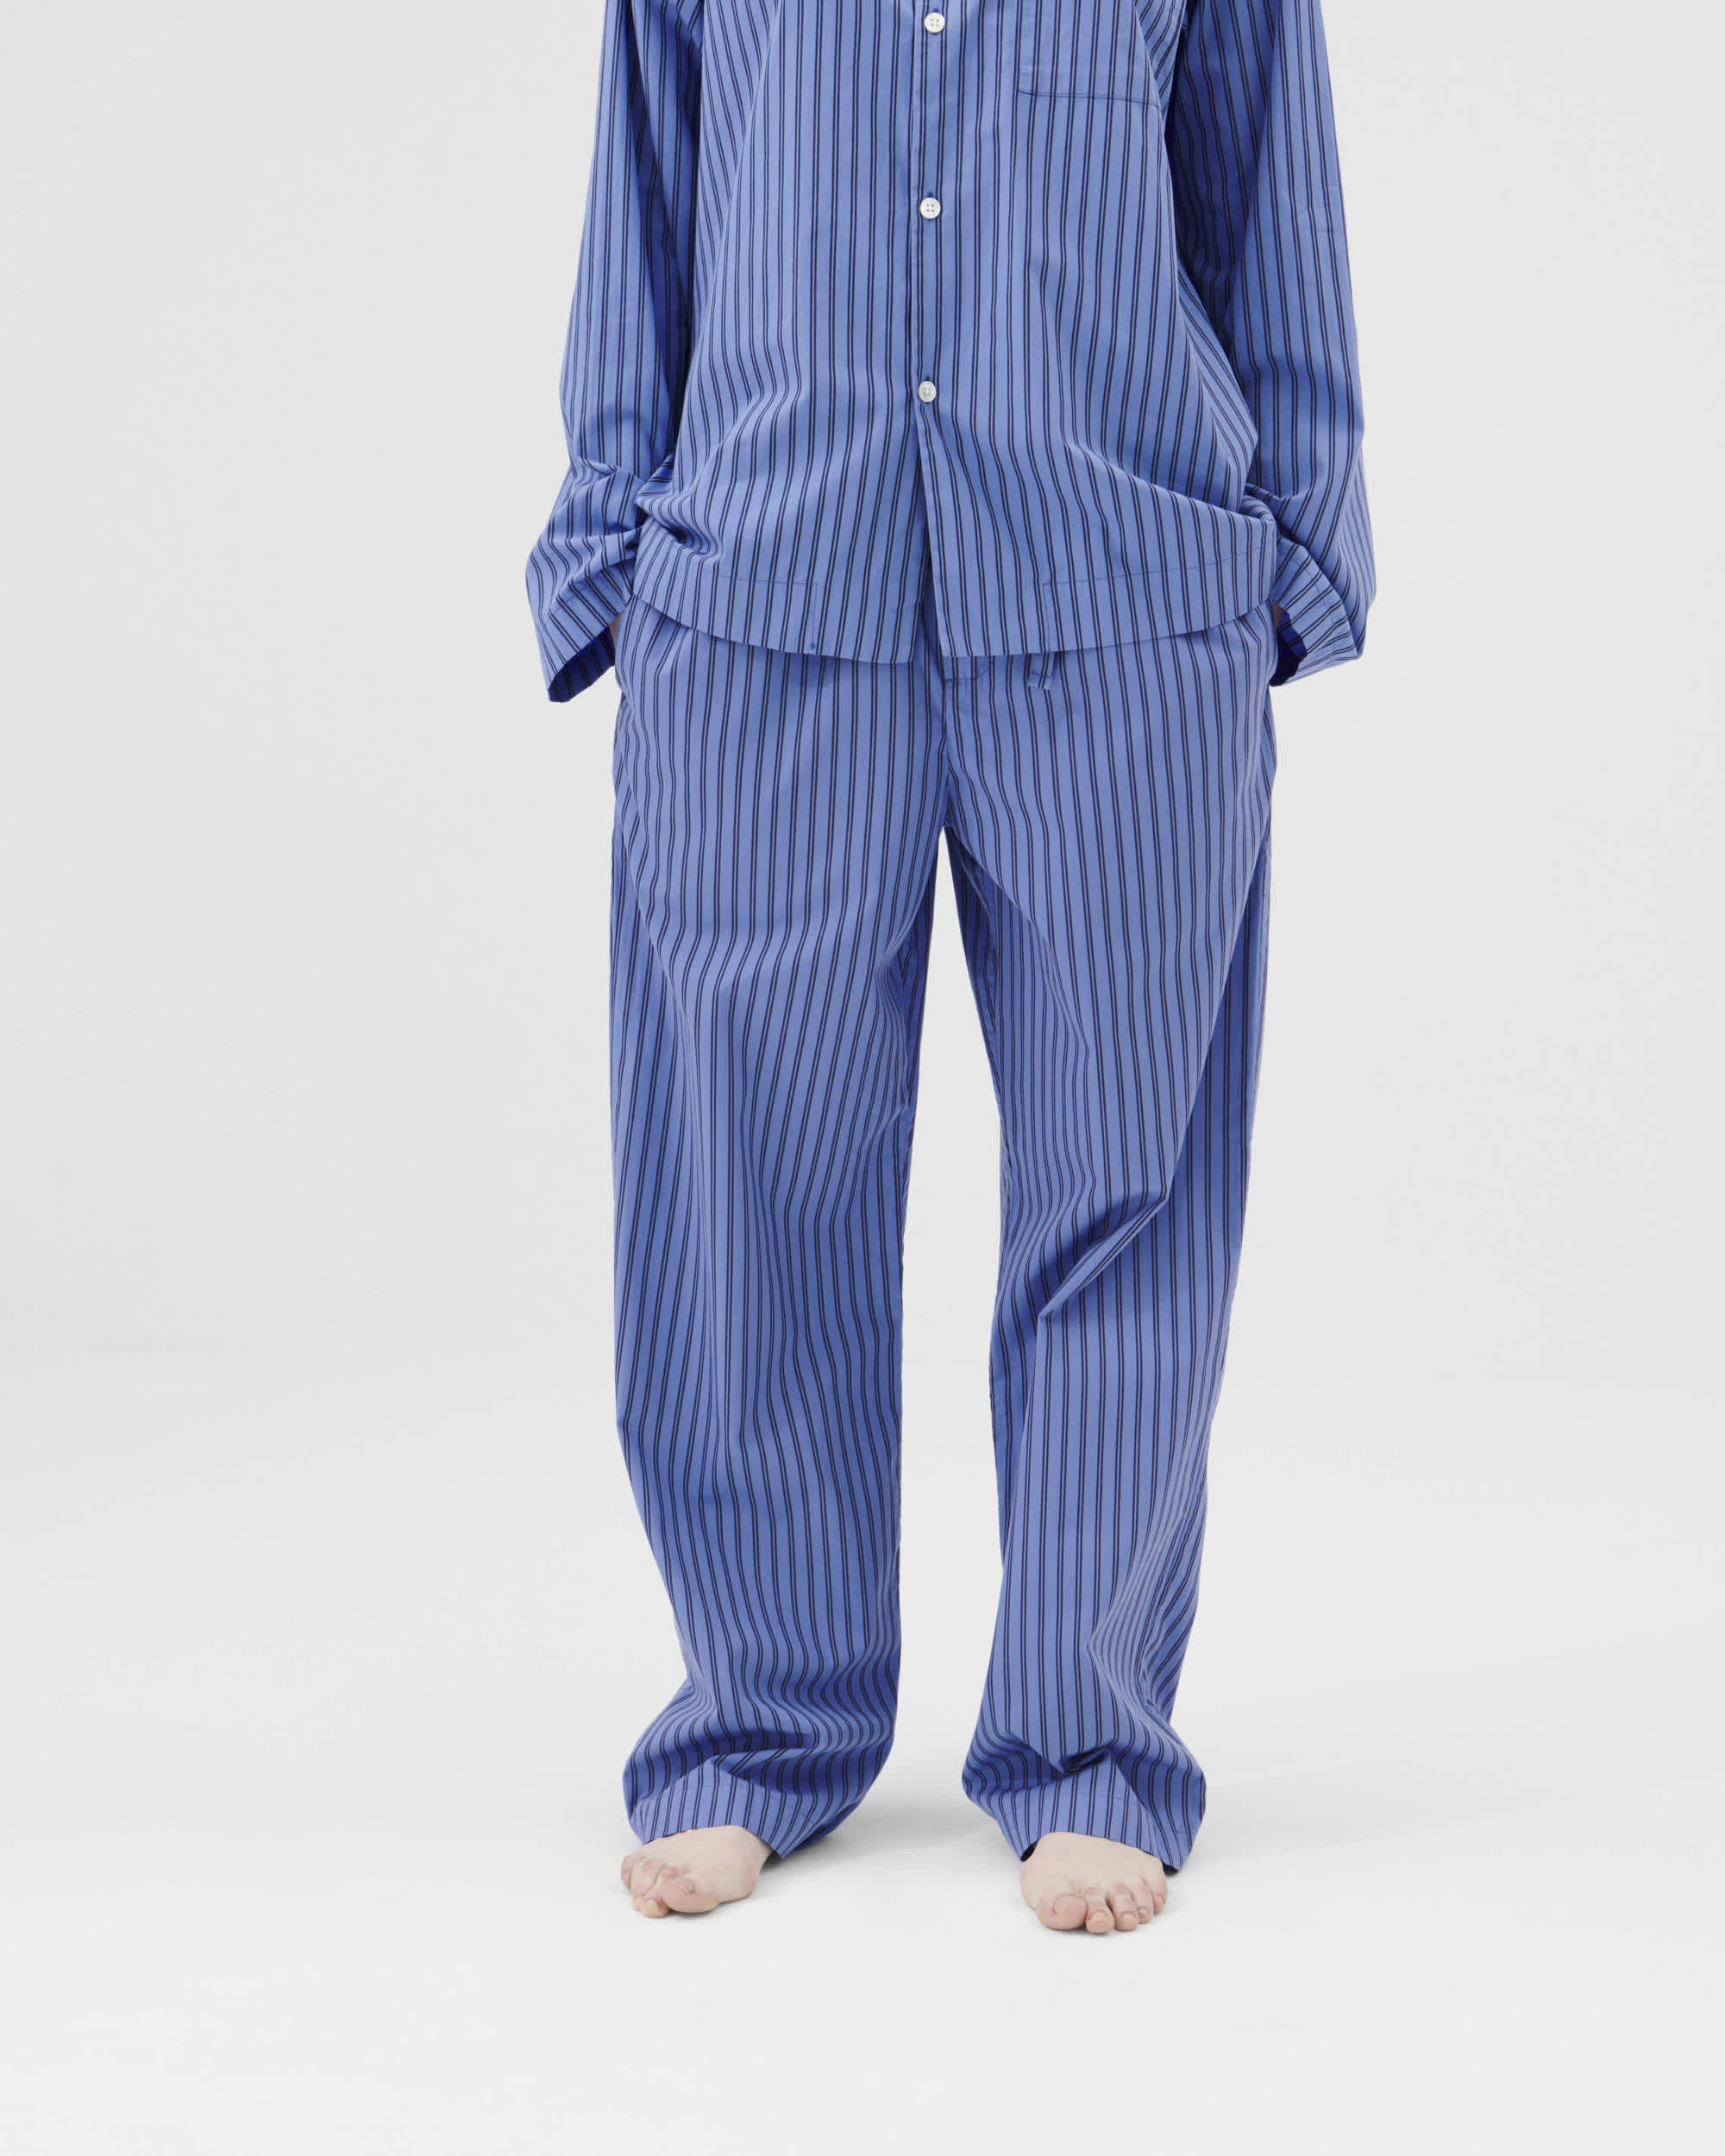 Poplin pajama pants Lola - M-L / US size 8-10 / UK 10-12